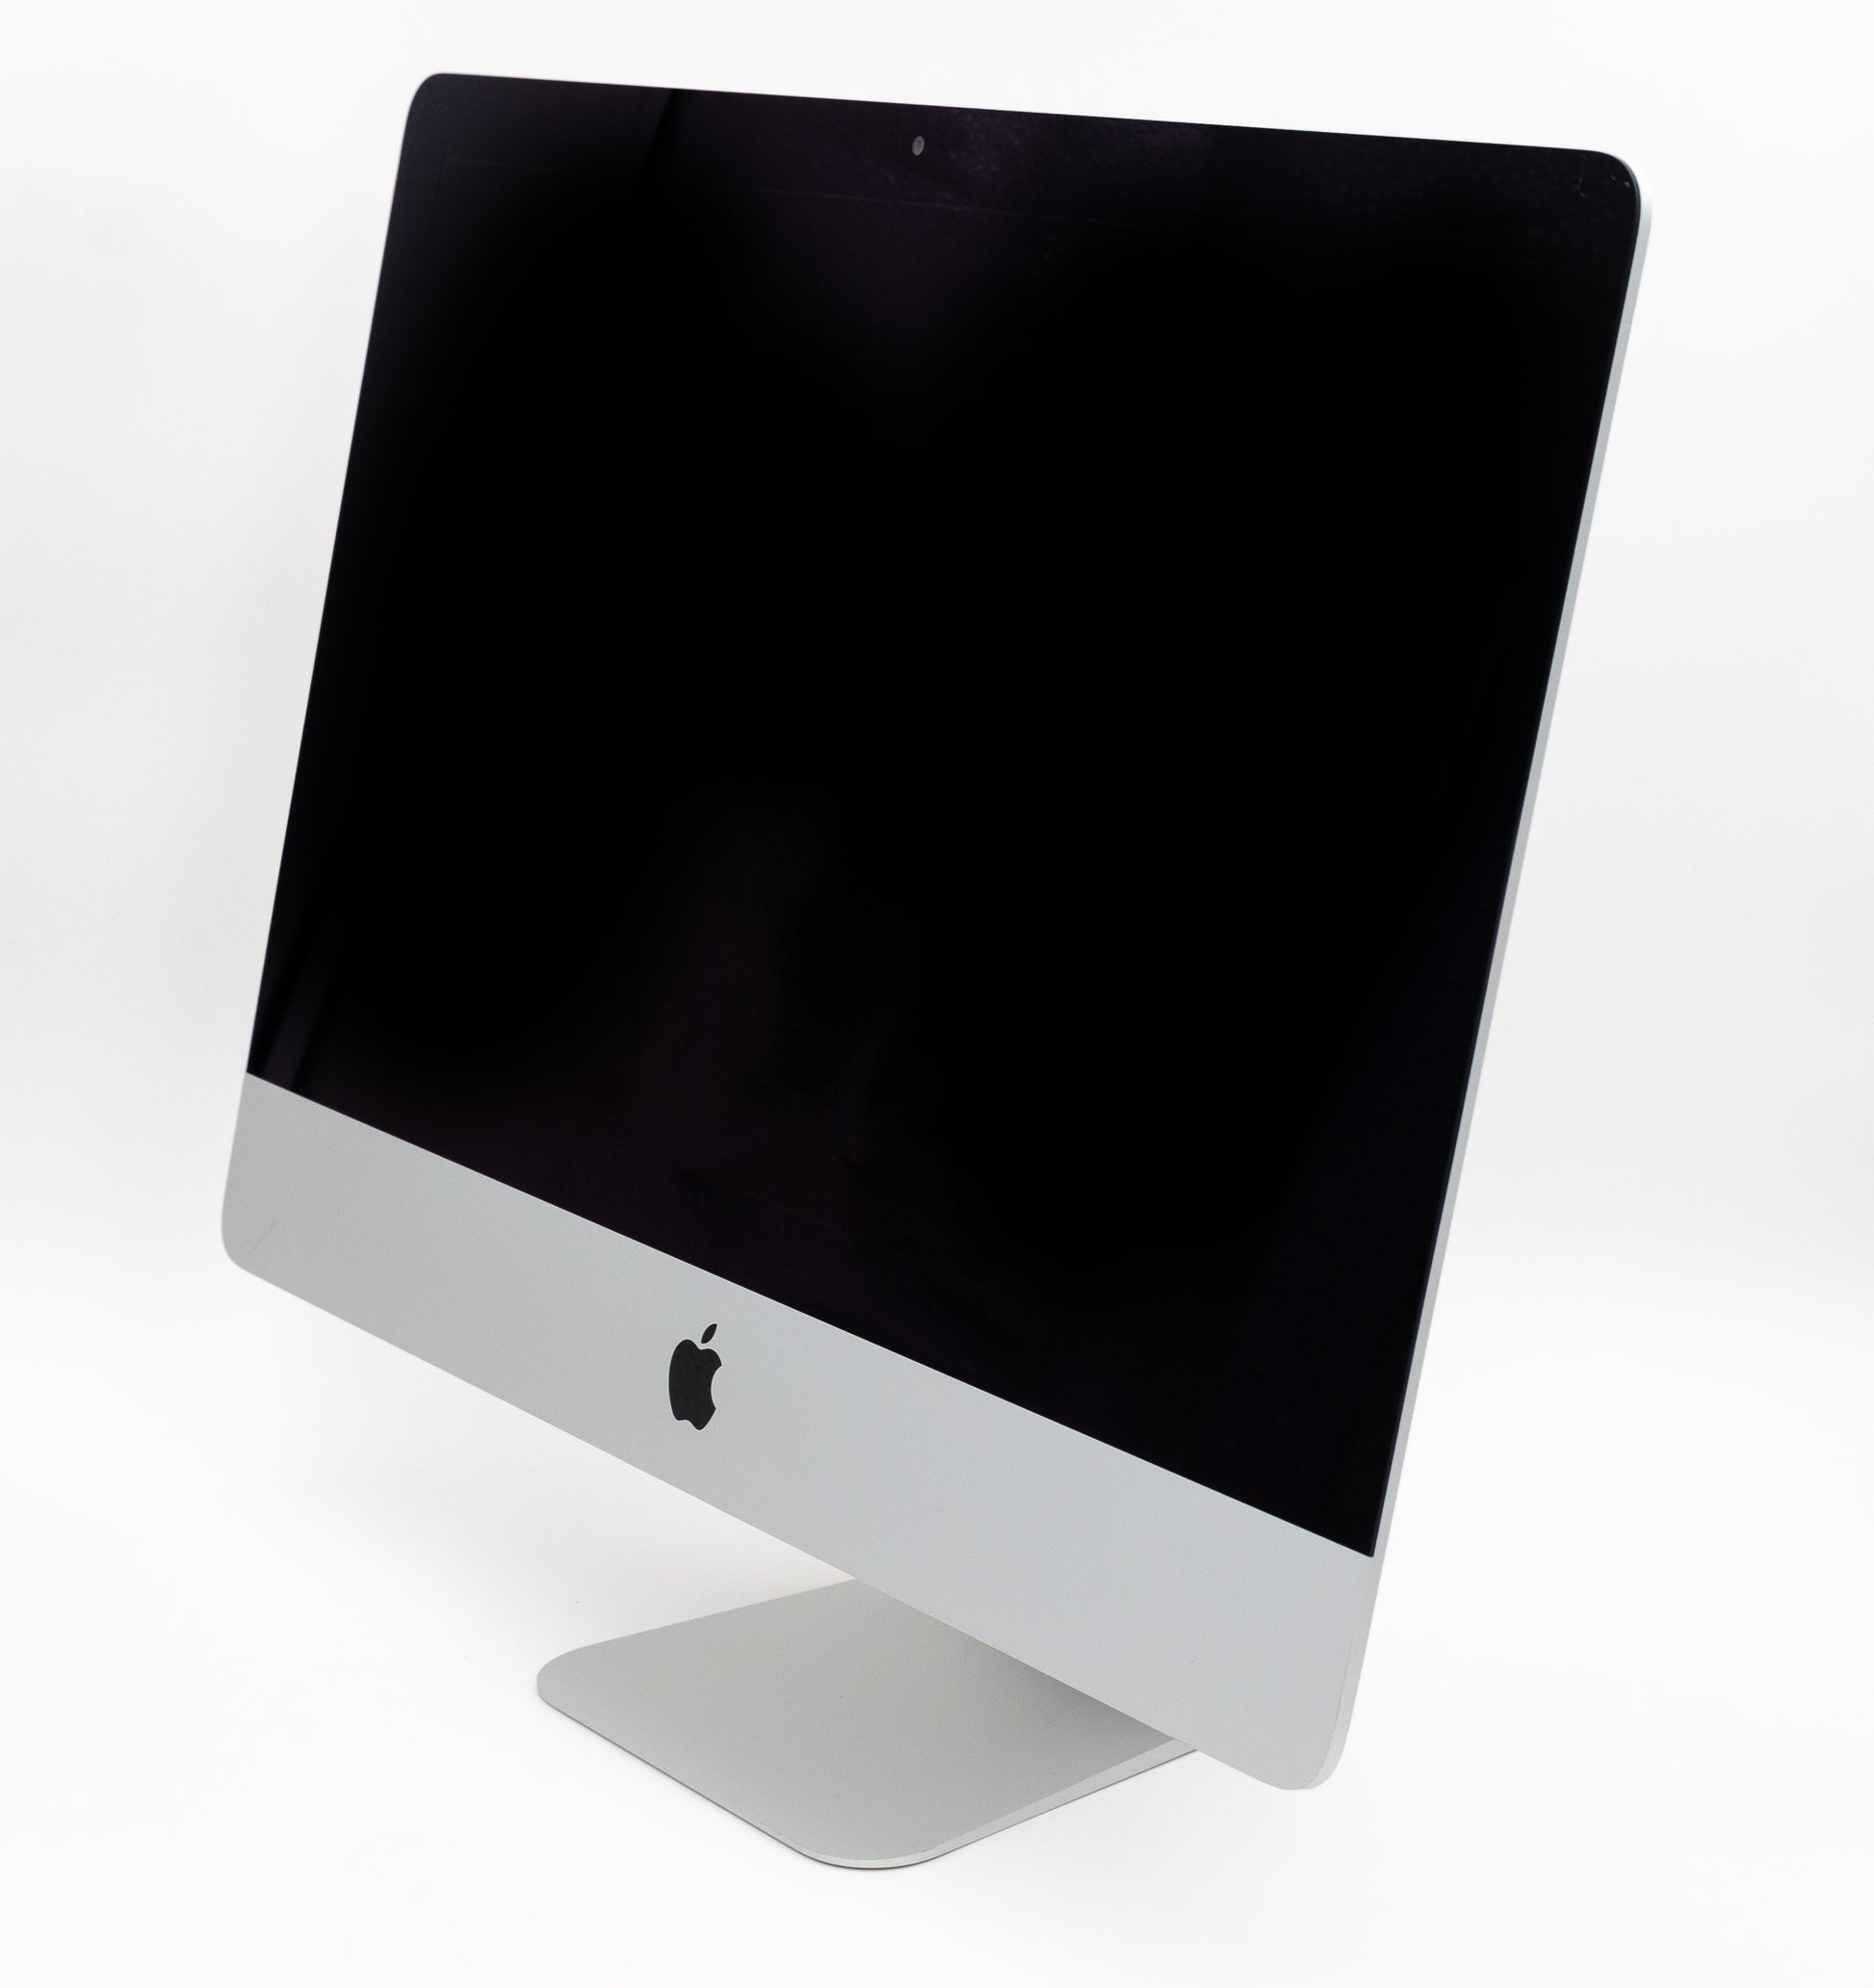 apple-mid-2014-21.5-inch-imac-ultra-thin-a1418-aluminum-dci5 - 1.4ghz, 8gb ram, pro 5000 - 1.5gb gpu-5